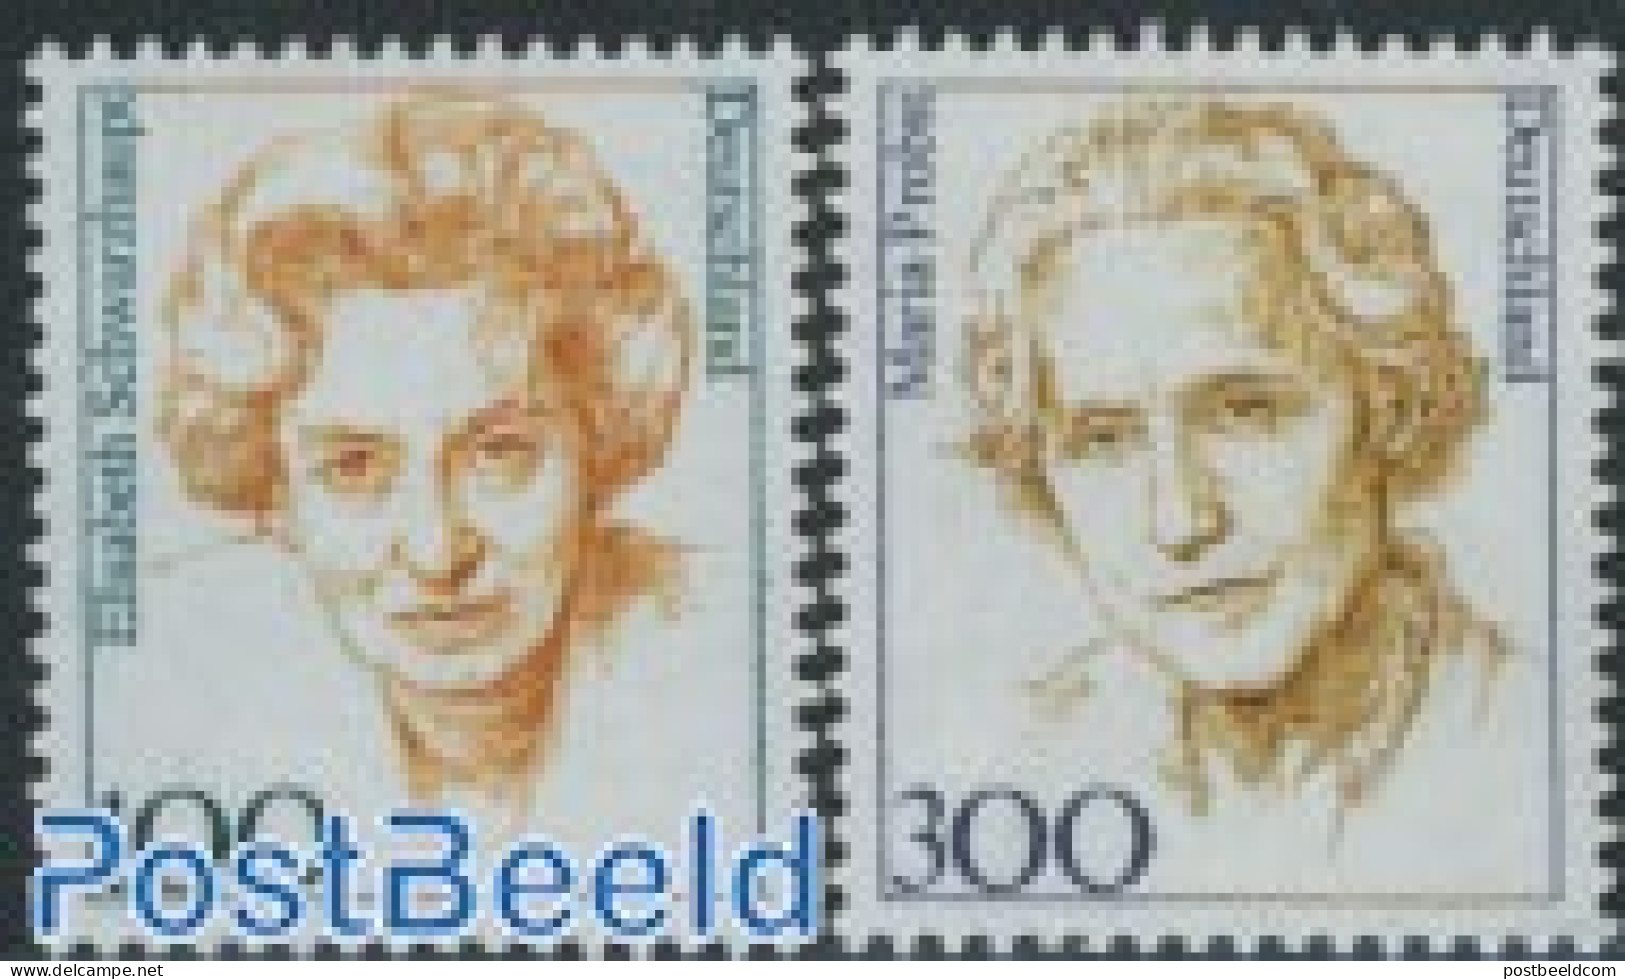 Germany, Federal Republic 1997 Definitives, Women 2v, Mint NH, History - Politicians - Women - Ungebraucht